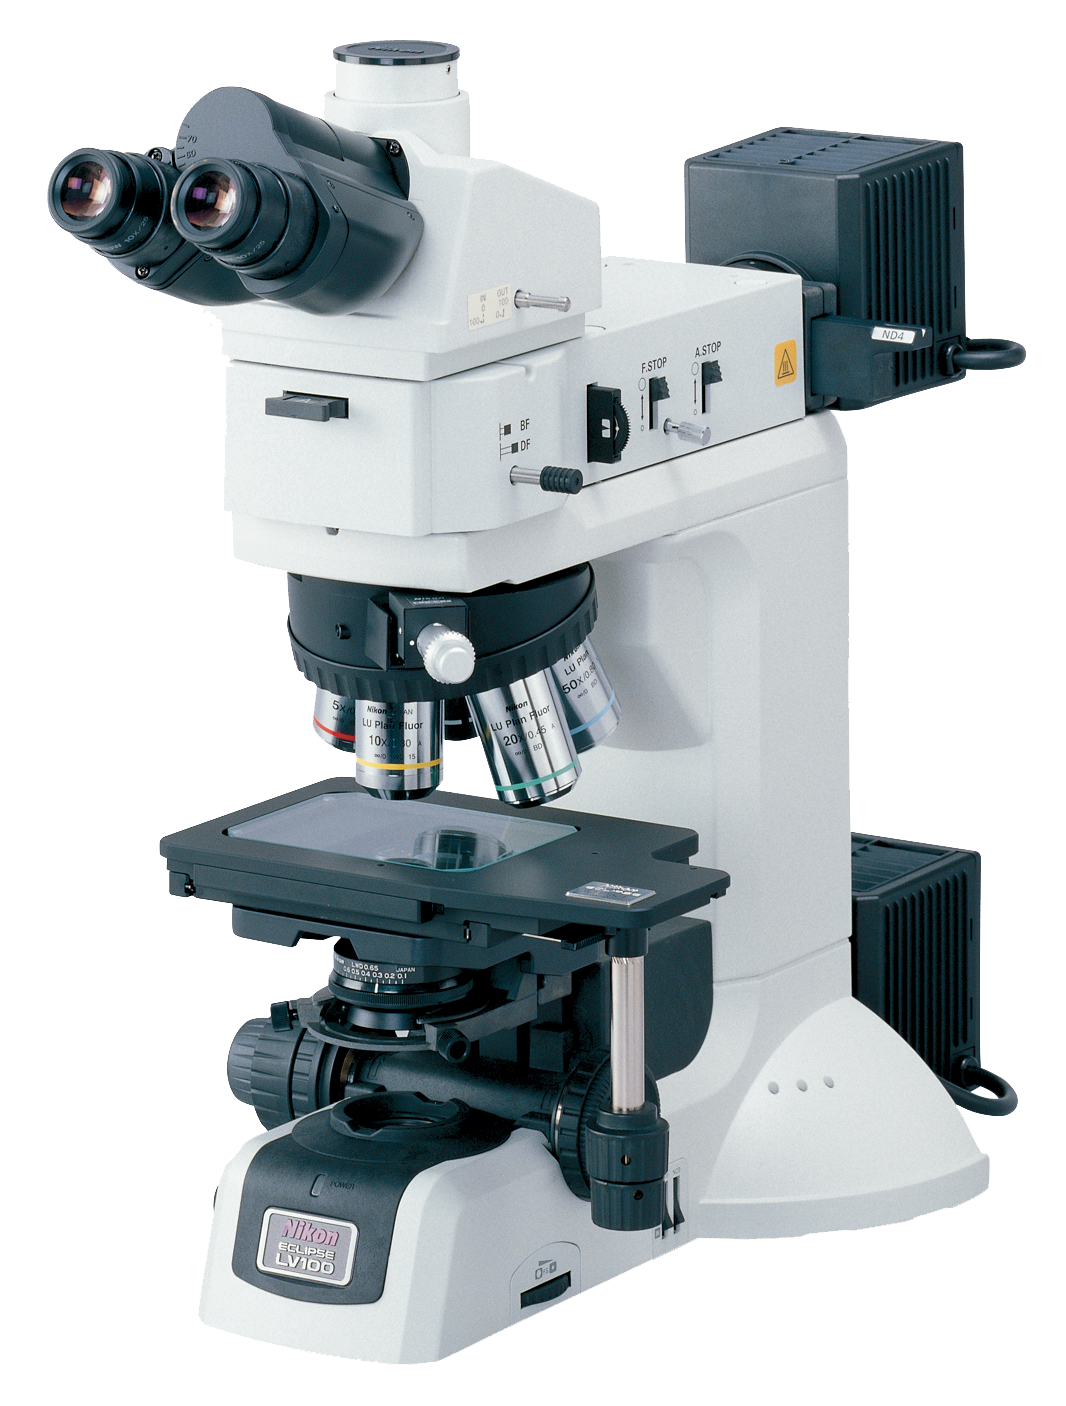 Nikon Eclipse LV100DA-U Universal Design Microscope